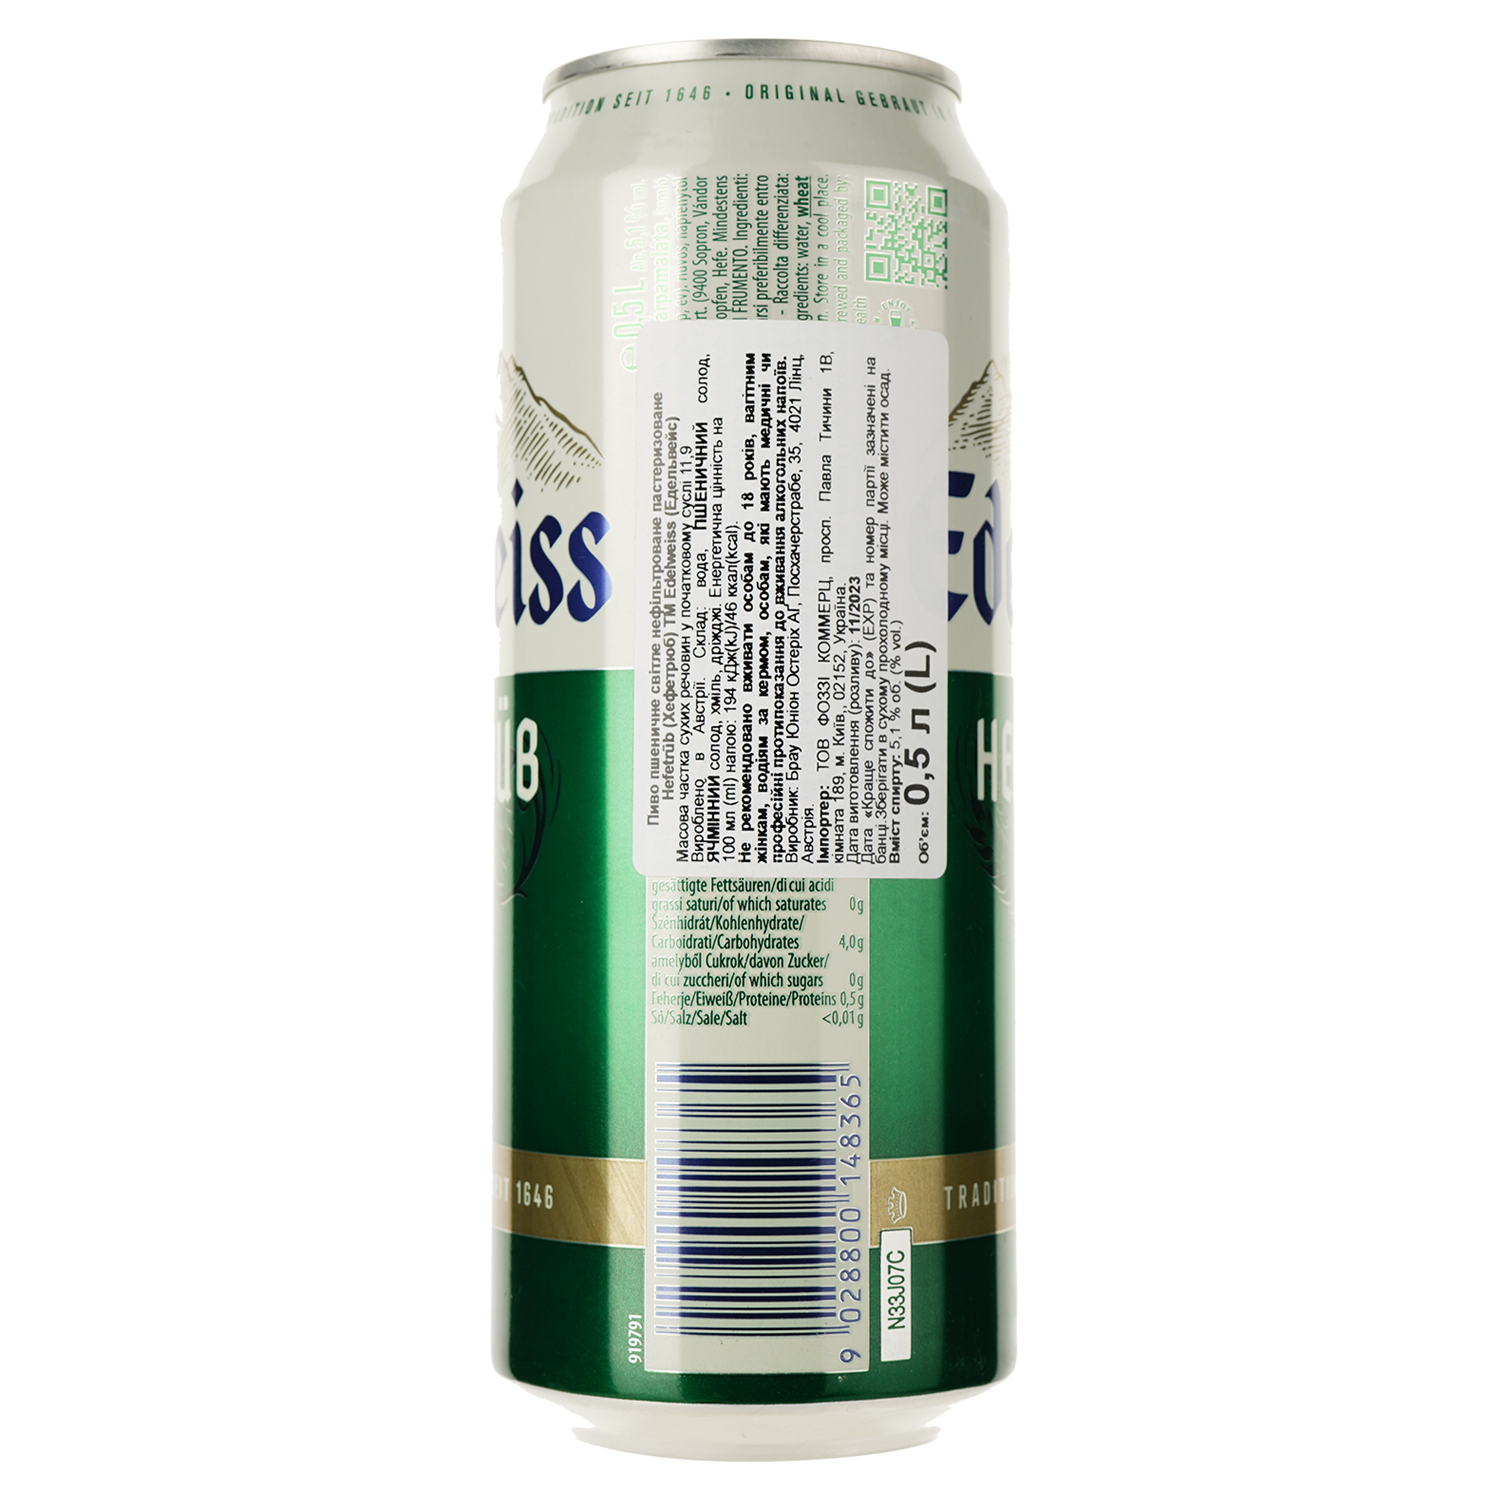 Пиво Edelweiss Weissbier Hefetrub, світле, 5.3%, 0.5 л, з/б - фото 2